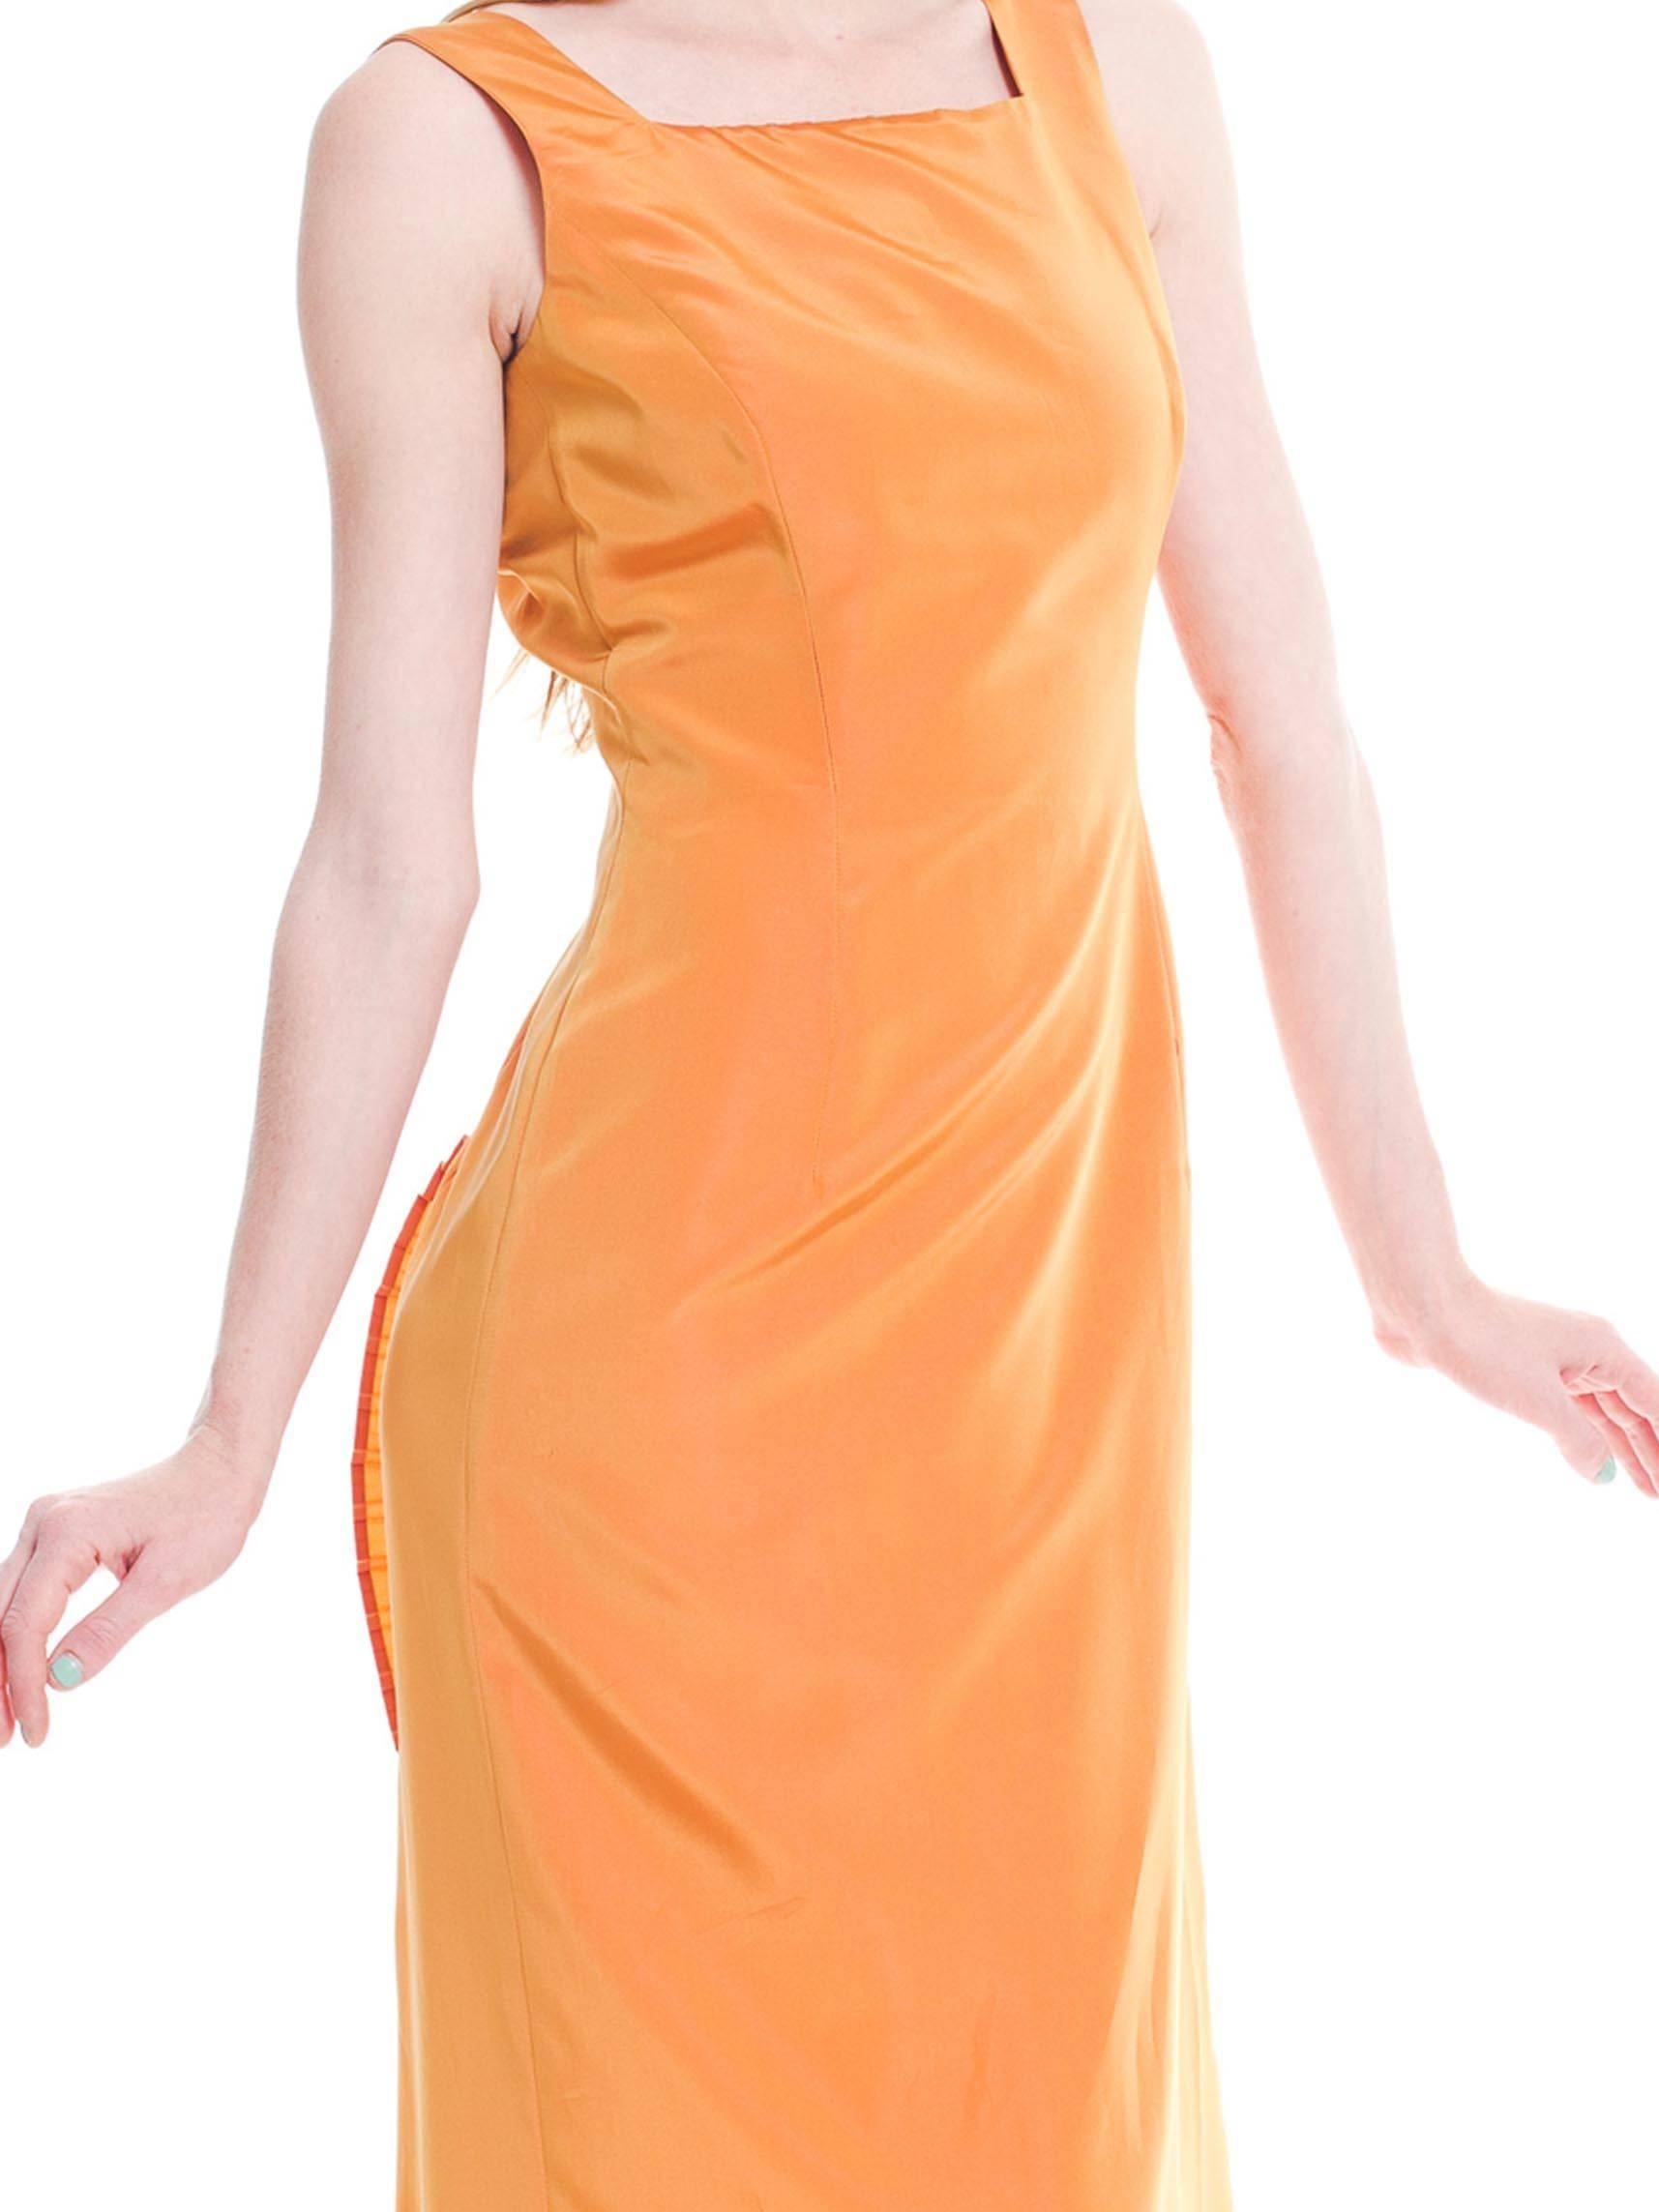 Women's 1990S GIANFRANCO FERRE Light Orange Irridescent Acetate Taffeta Gown With Drama